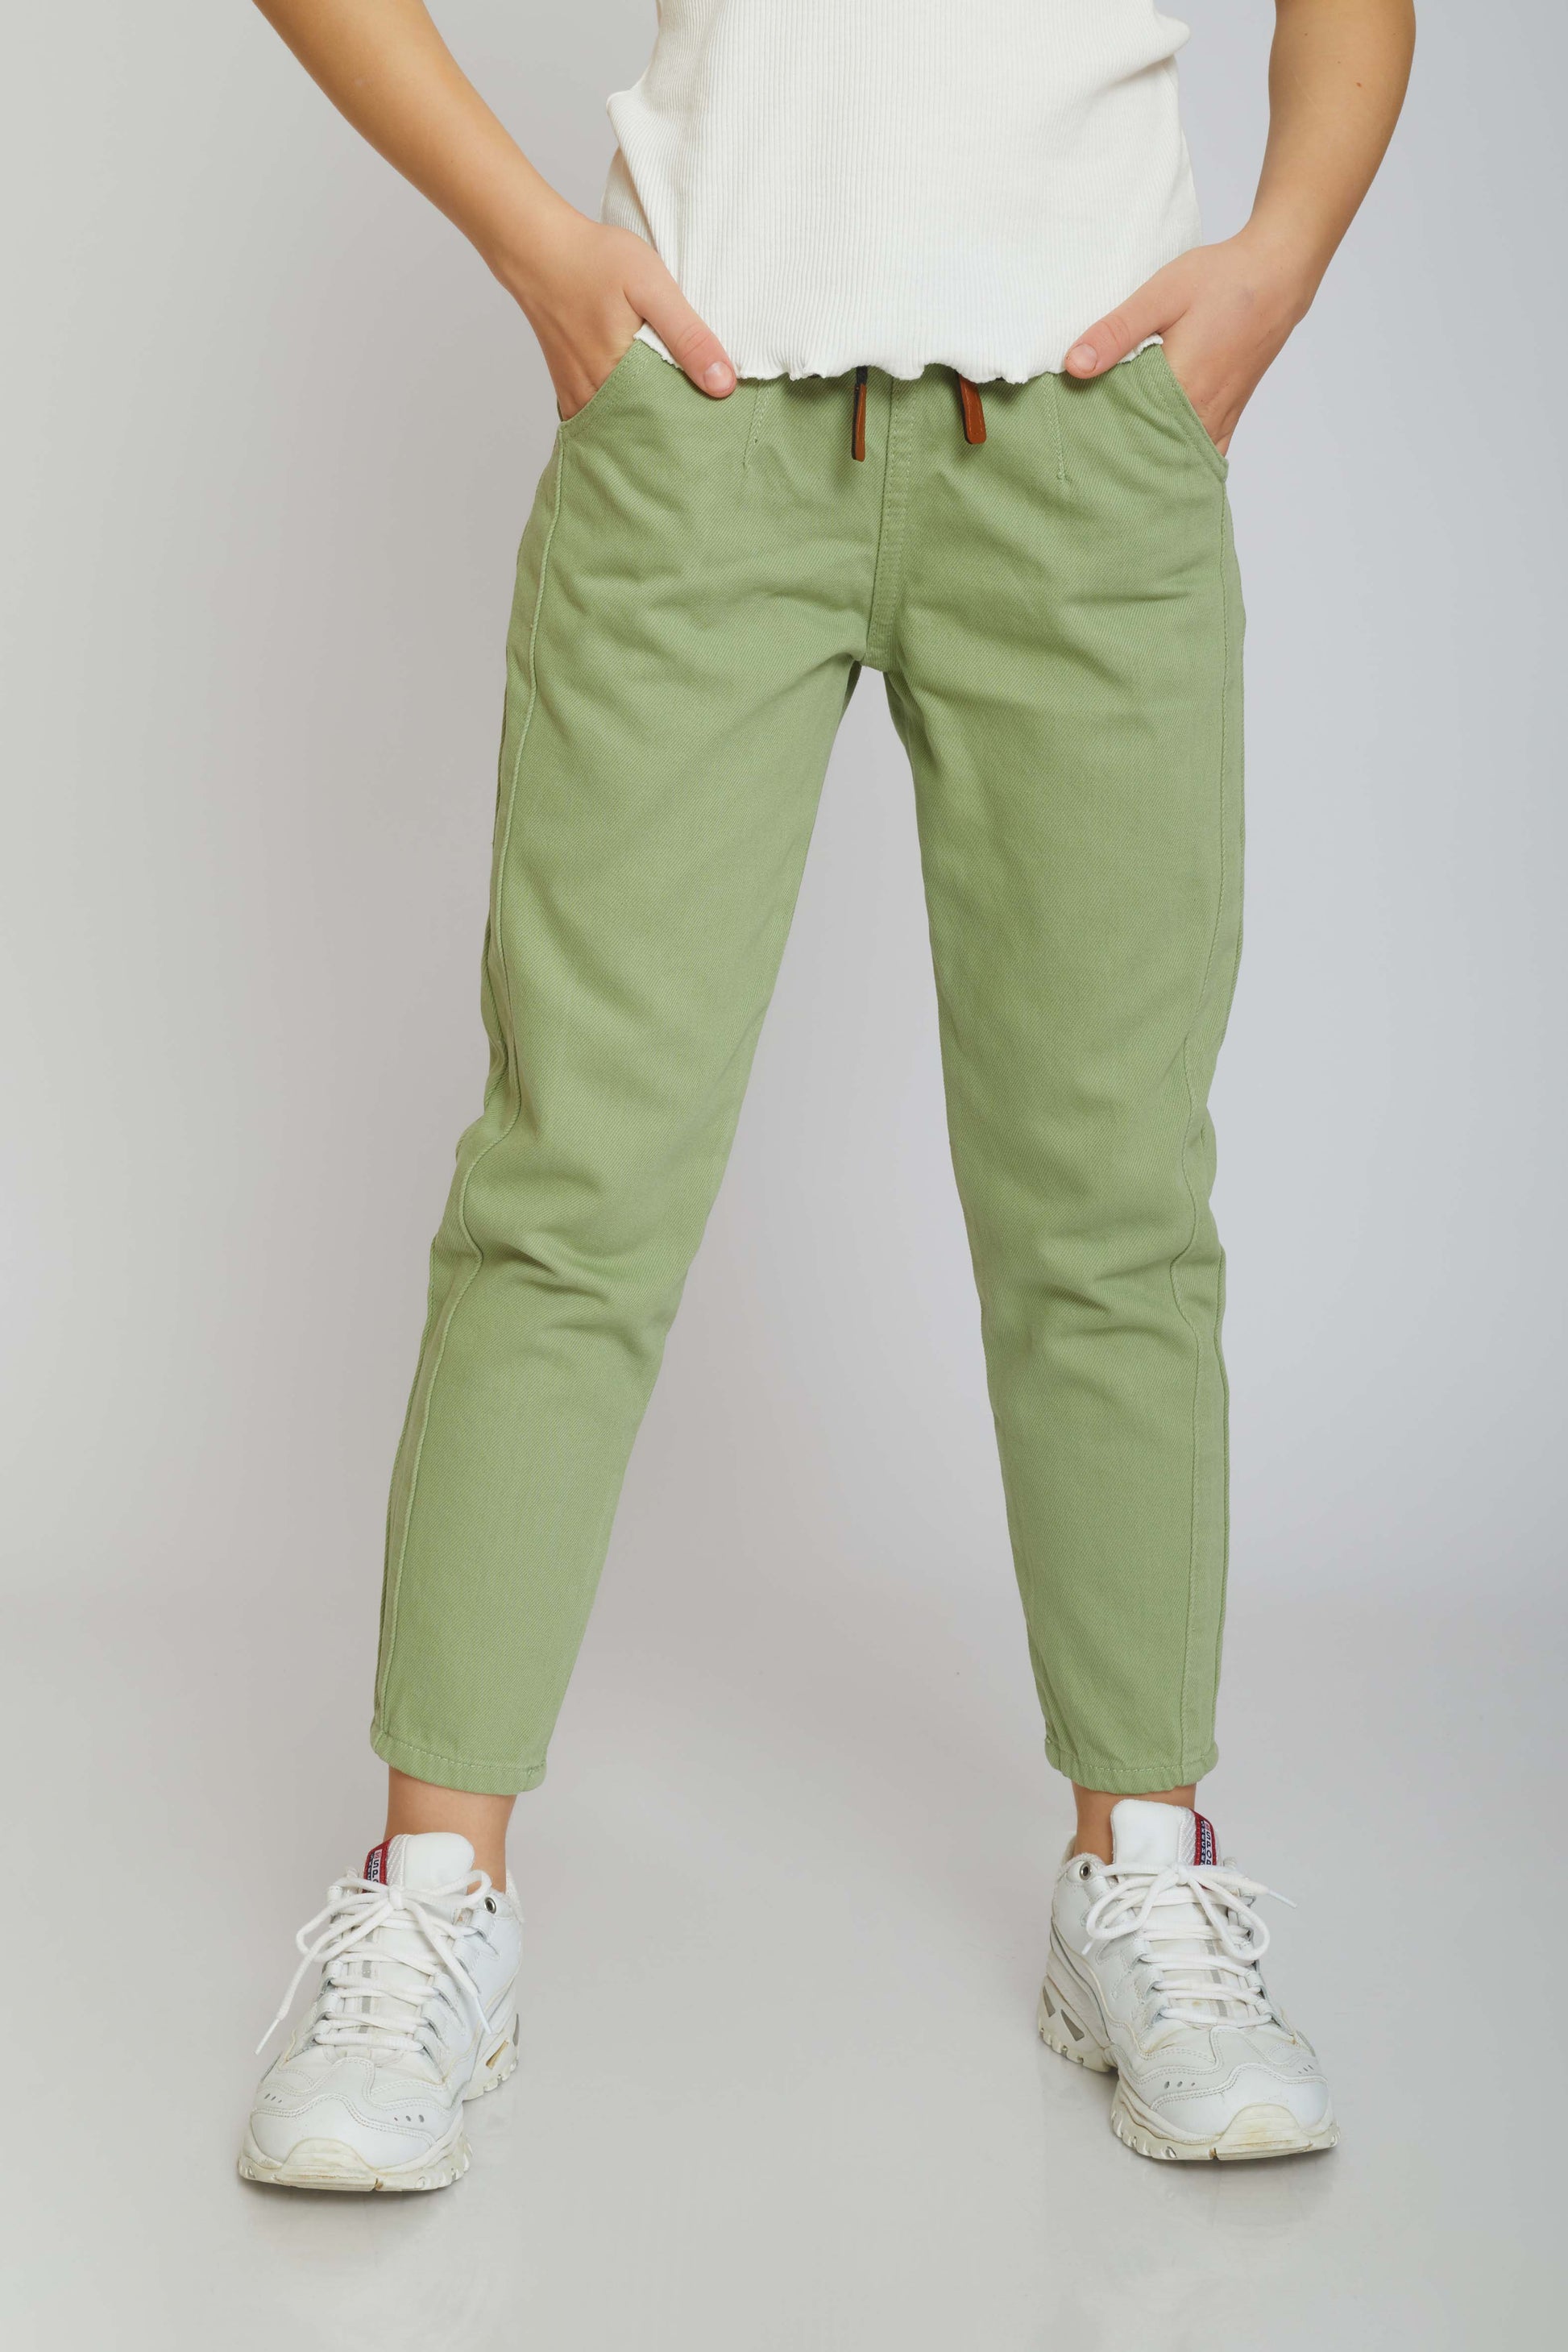 dj mom-fit gabardine elastic waistband - kids - mint green